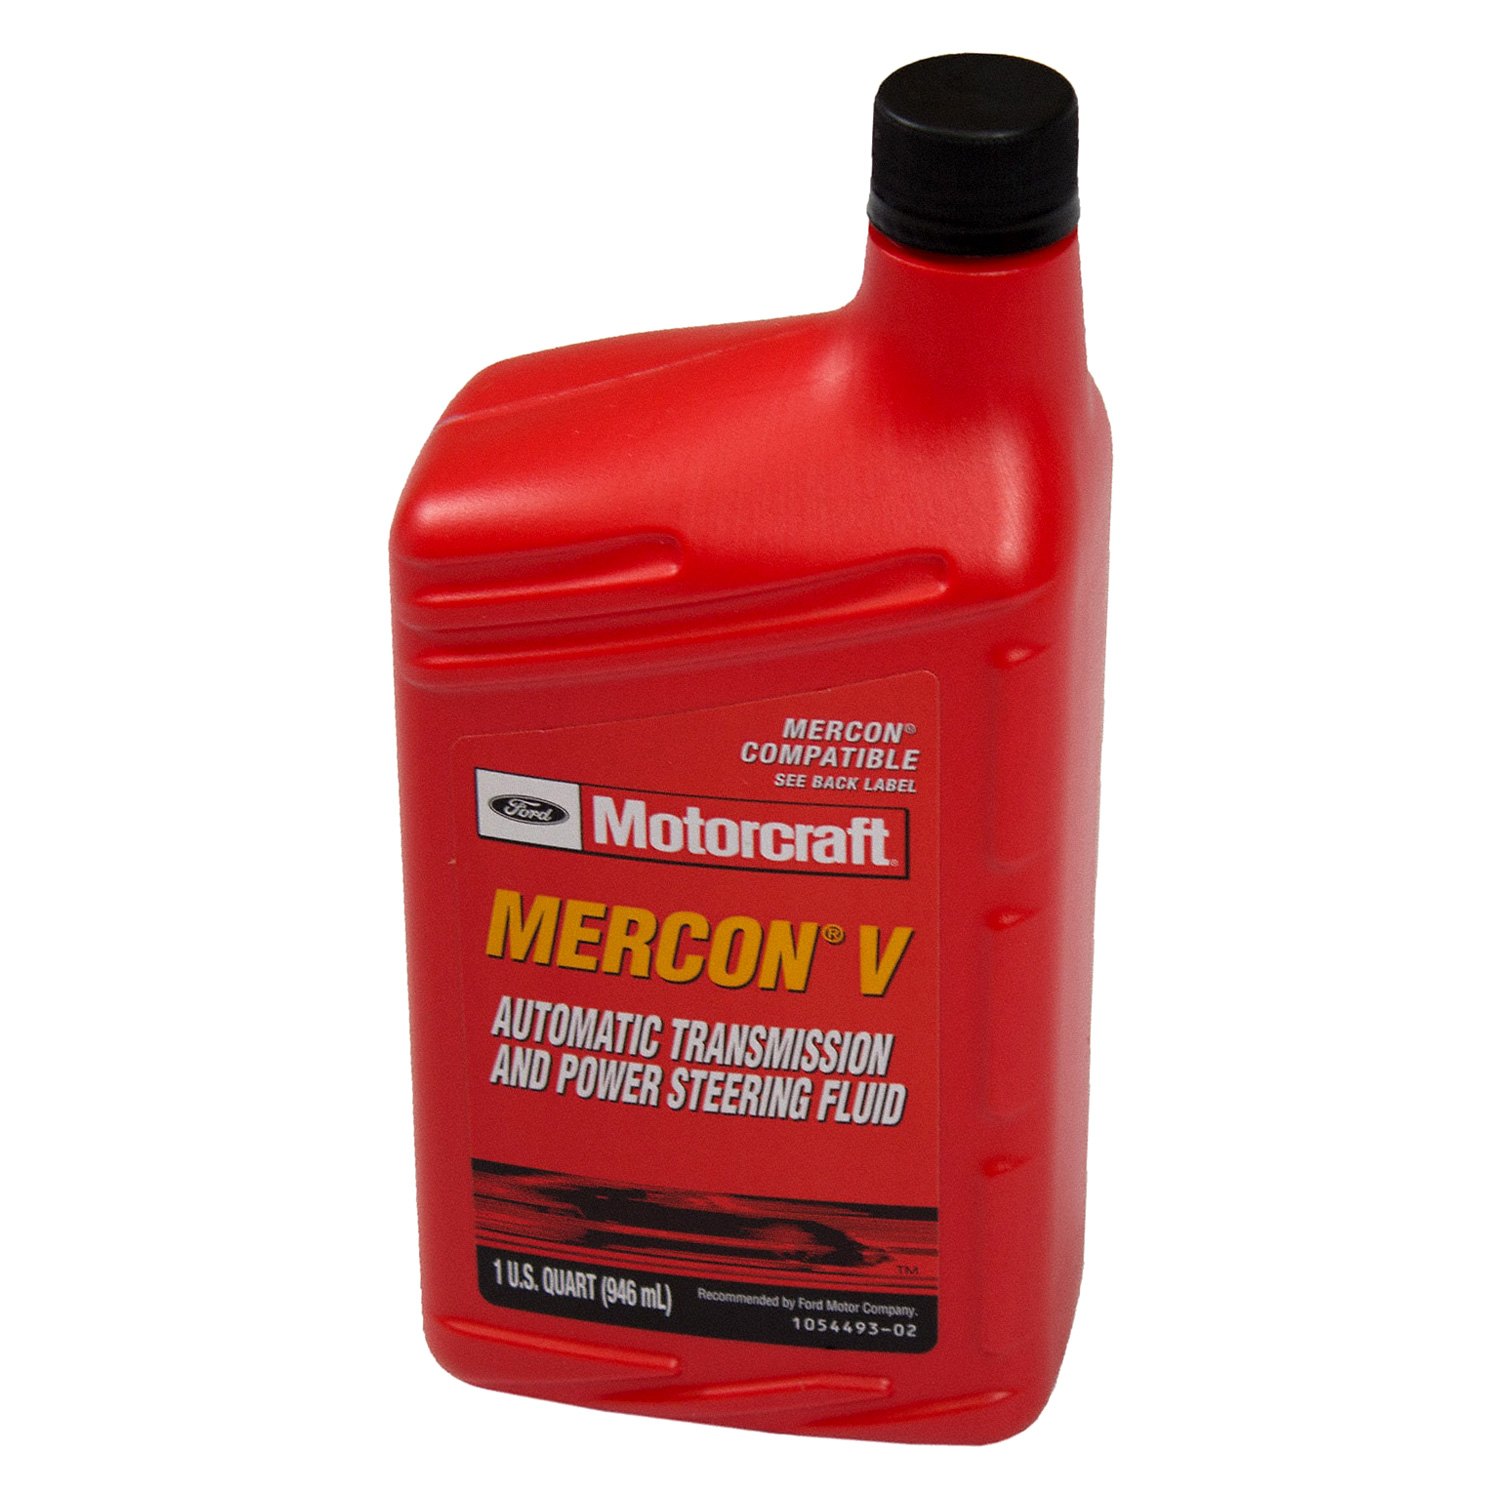 Motorcraft® - Ford F-150 6-Speed 2018 Mercon LV Automatic Transmission Fluid